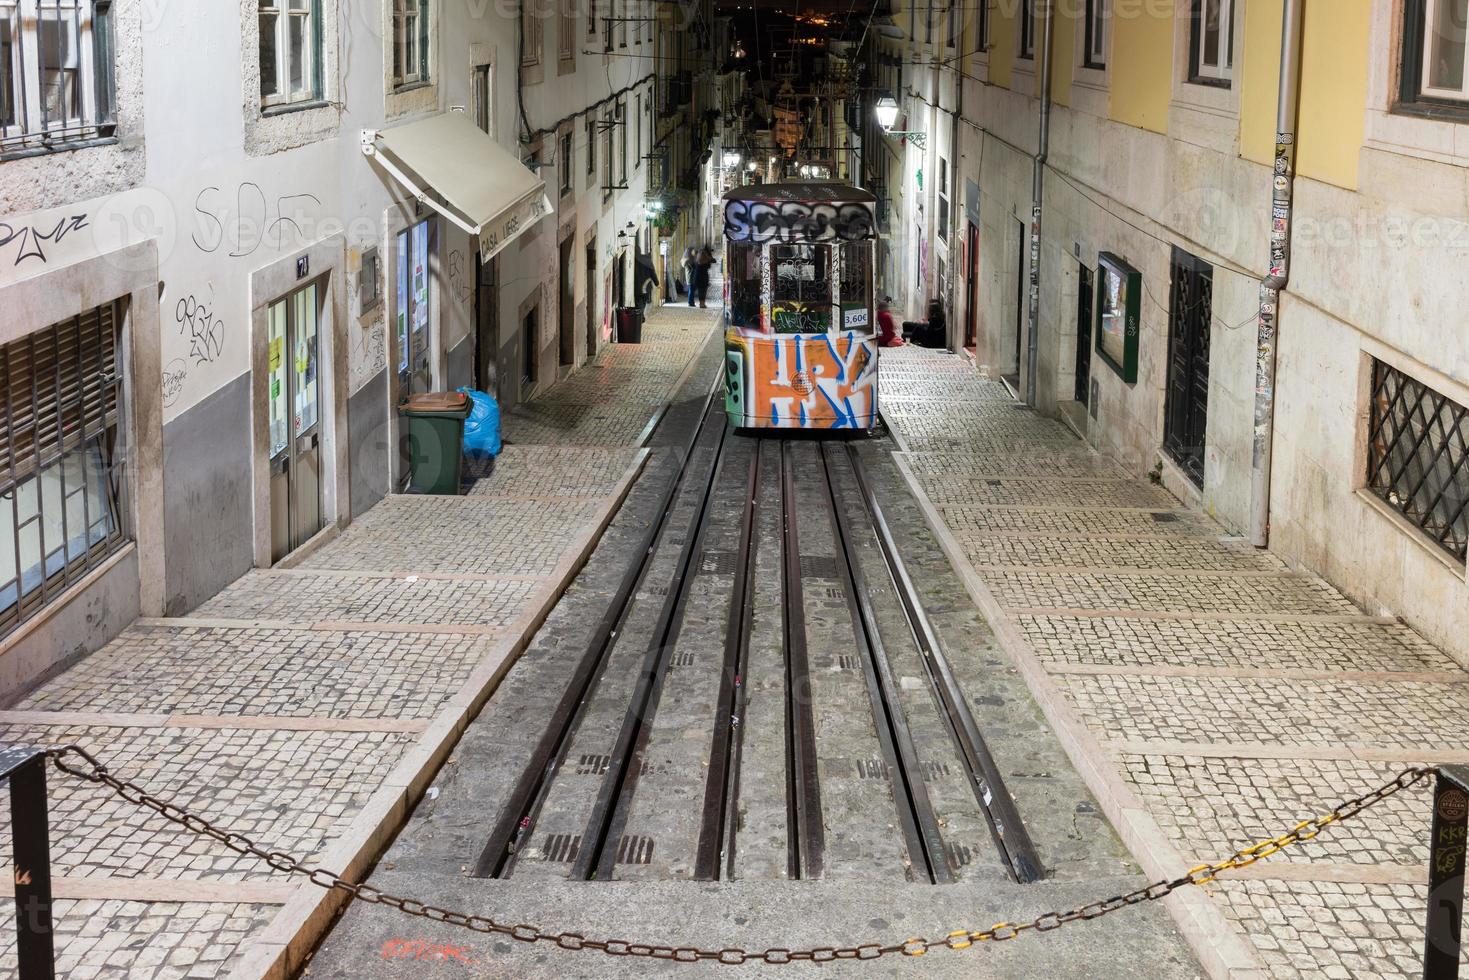 wijnoogst beroemd bica tram Bij nacht met graffiti in Lissabon, Portugal. foto